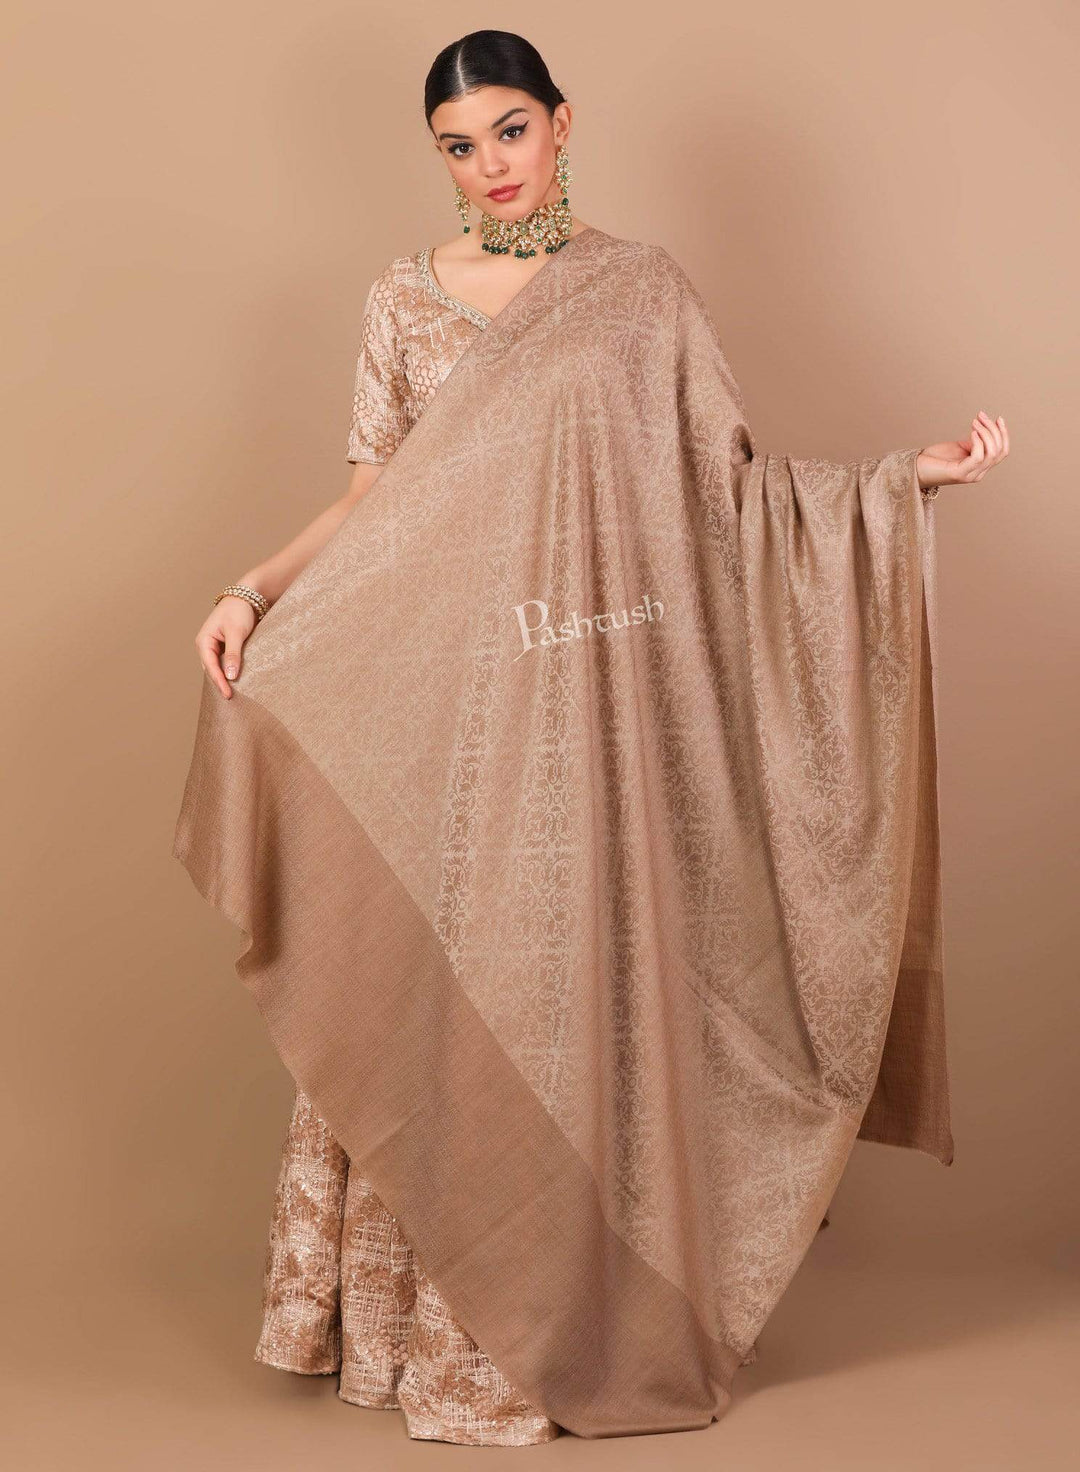 Pashtush Store Shawl Pashtush Womens Woven Paisley, Self Shawl, in Extra Soft Fine Wool, Large Wrap Size